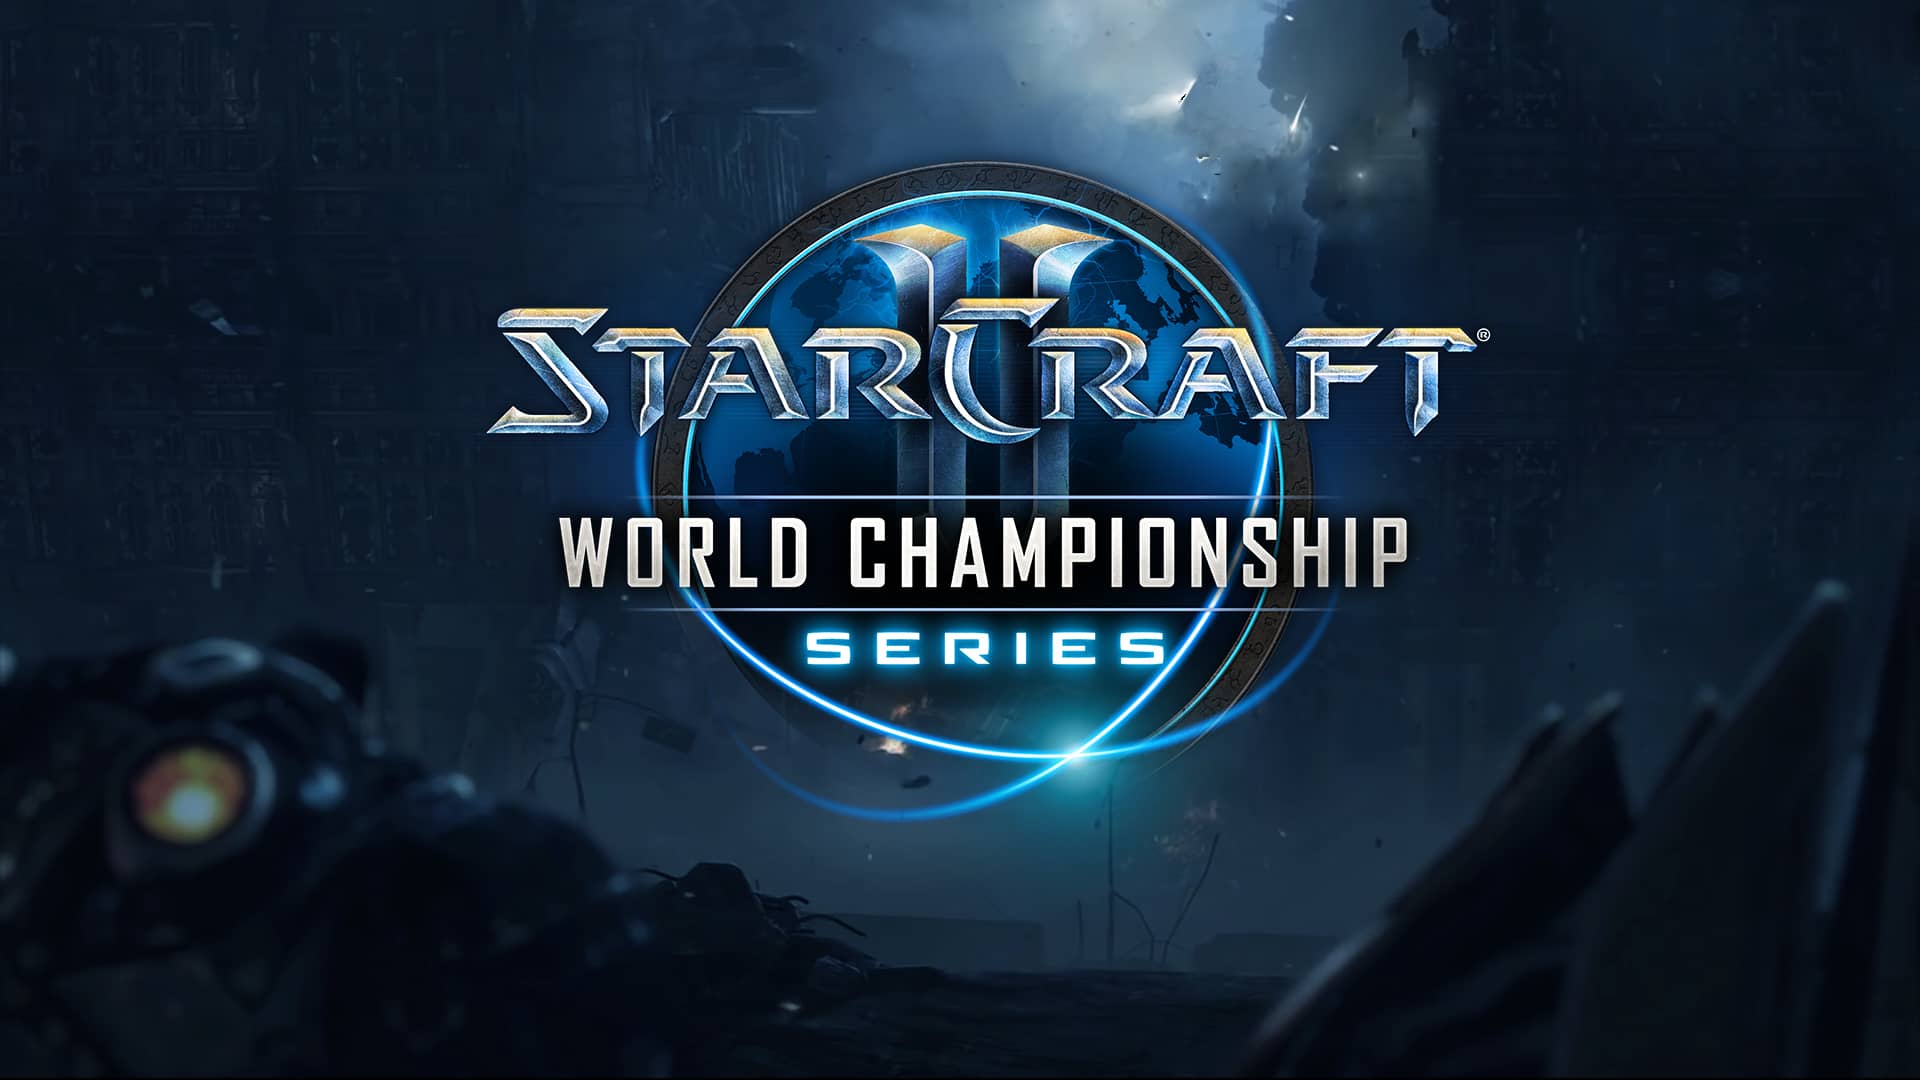 StarCraft II World Championship Series on Vimeo